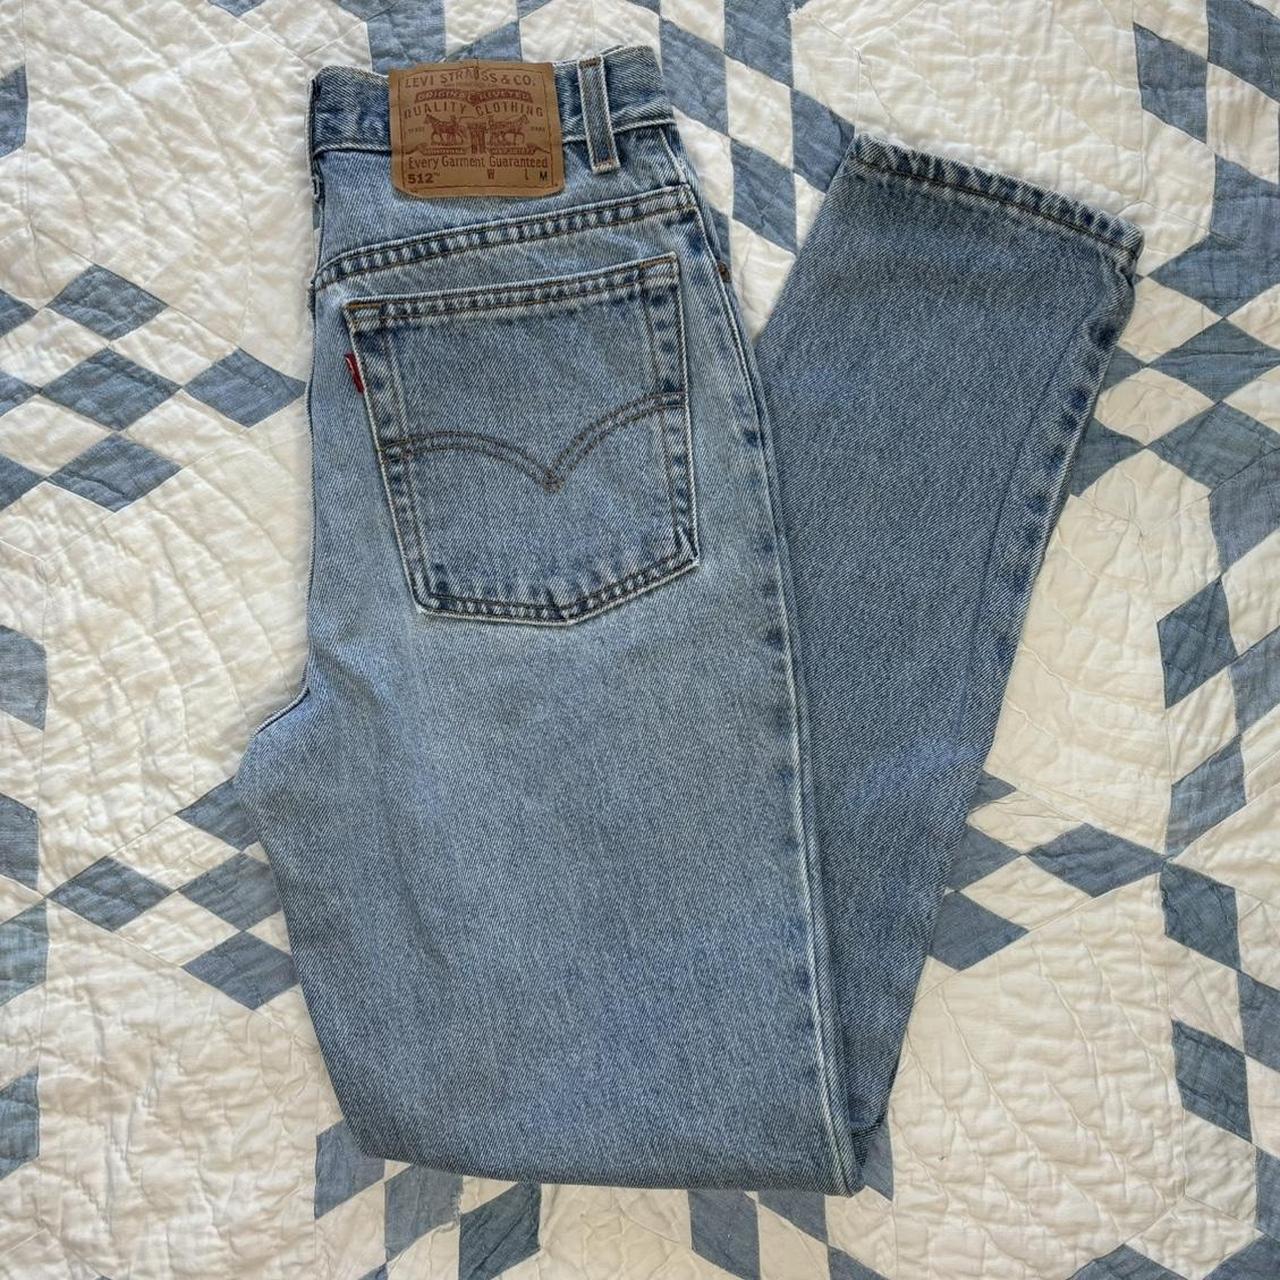 Vintage Levi’s 512 jeans Medium light wash 512... - Depop